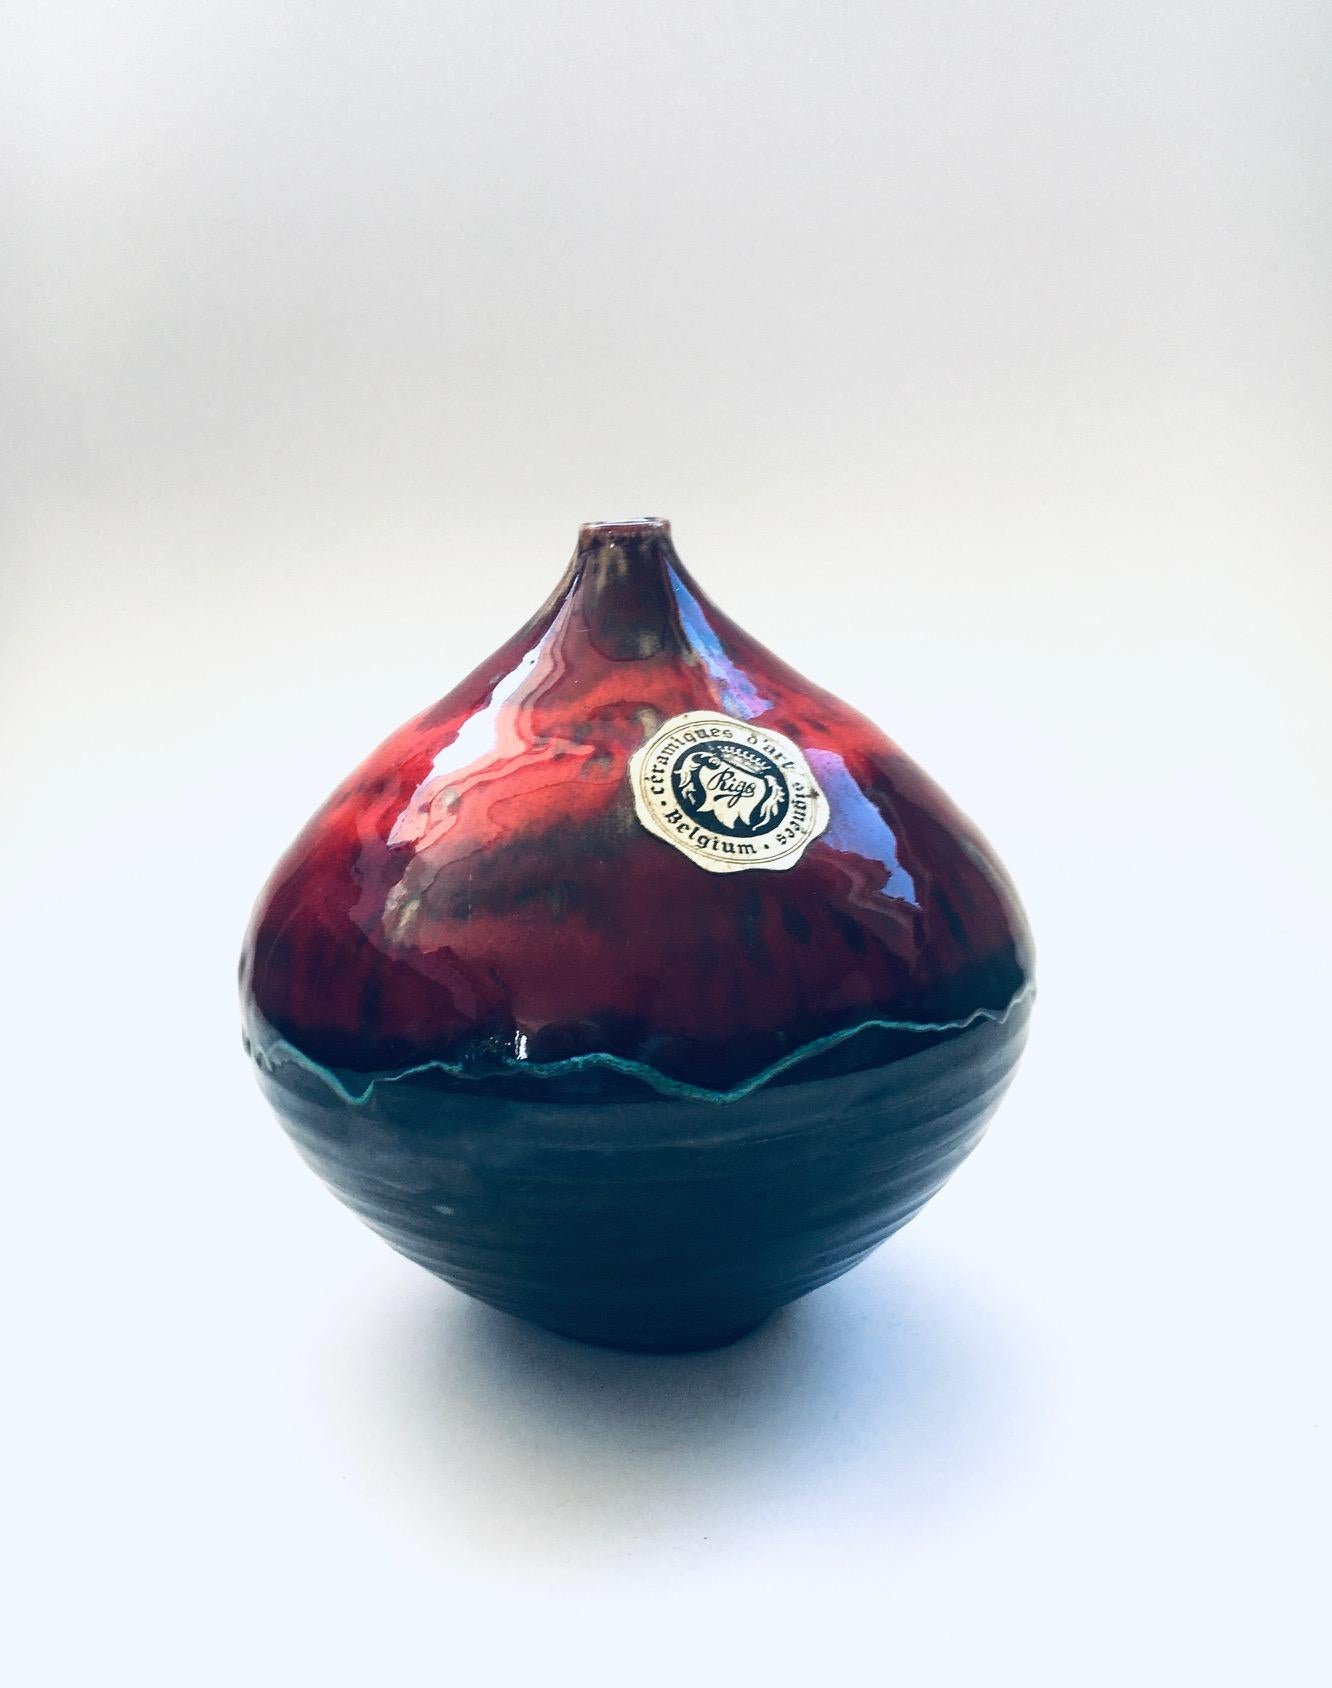 Vintage Midcentury Studio Art Pottery Ceramic Céramiques d'Art Signée Spout Vase, made in Belgium 1960's. Handmade ceramic vase in metal black underglaze with red and orange overglazes. In very good condition. Measures 16cm x 15cm x 15cm.